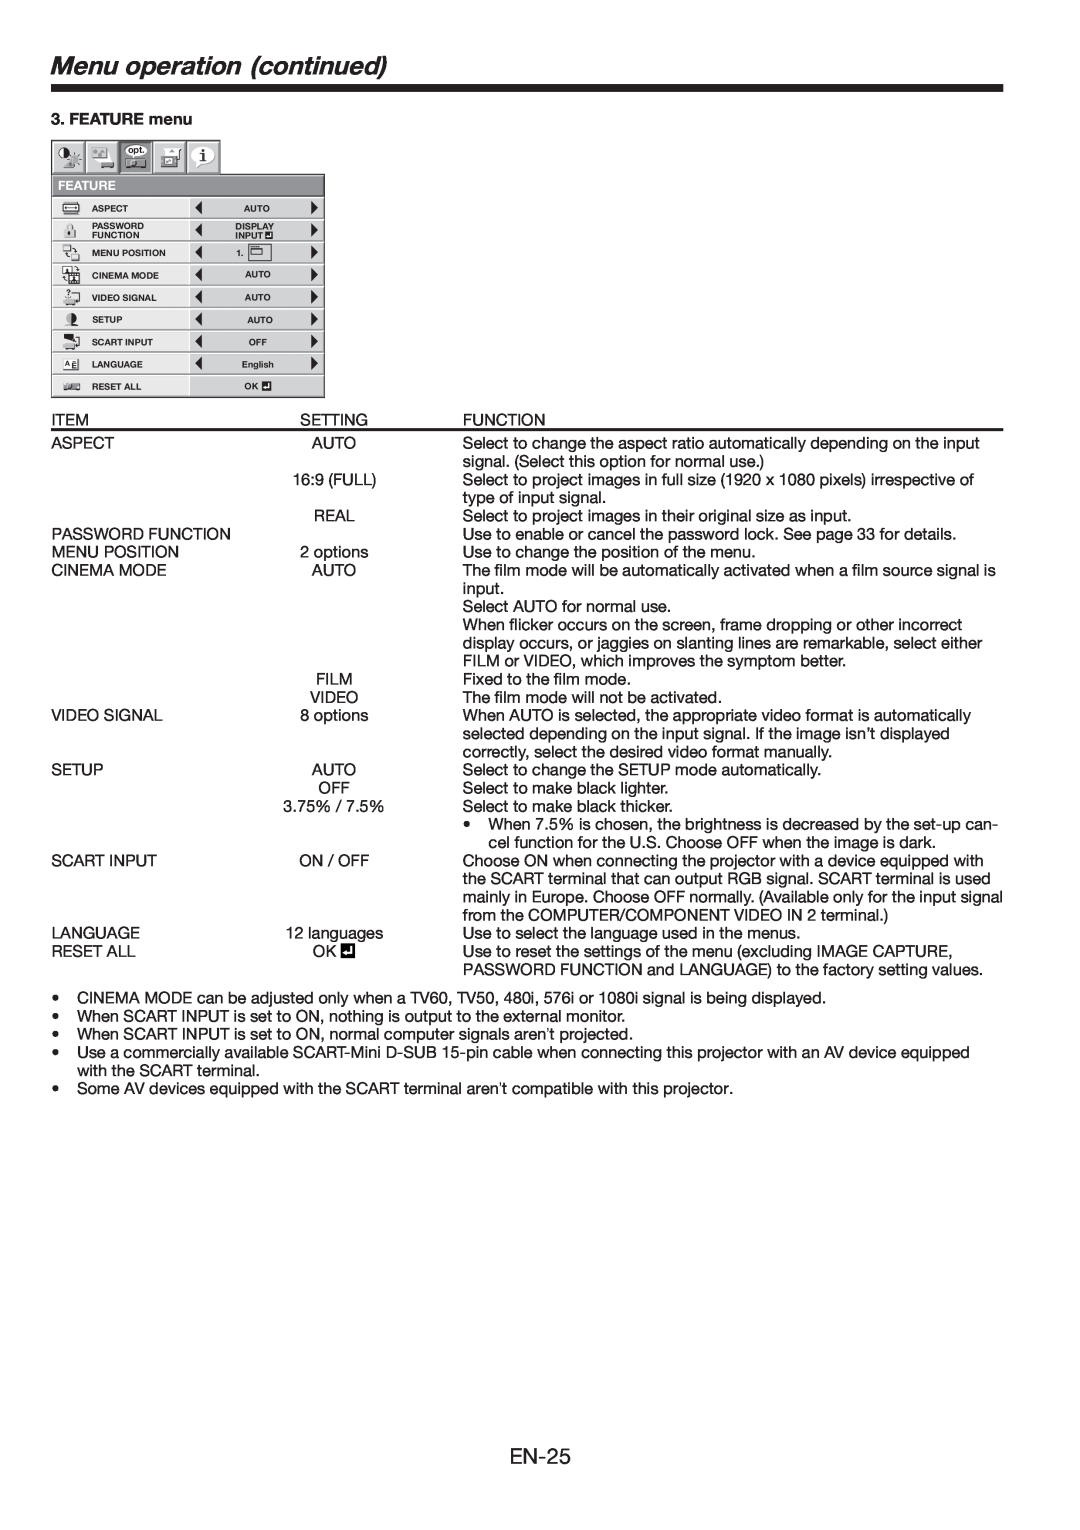 Mitsubishi Electronics FL6900U user manual Menu operation continued, EN-25, FEATURE menu 